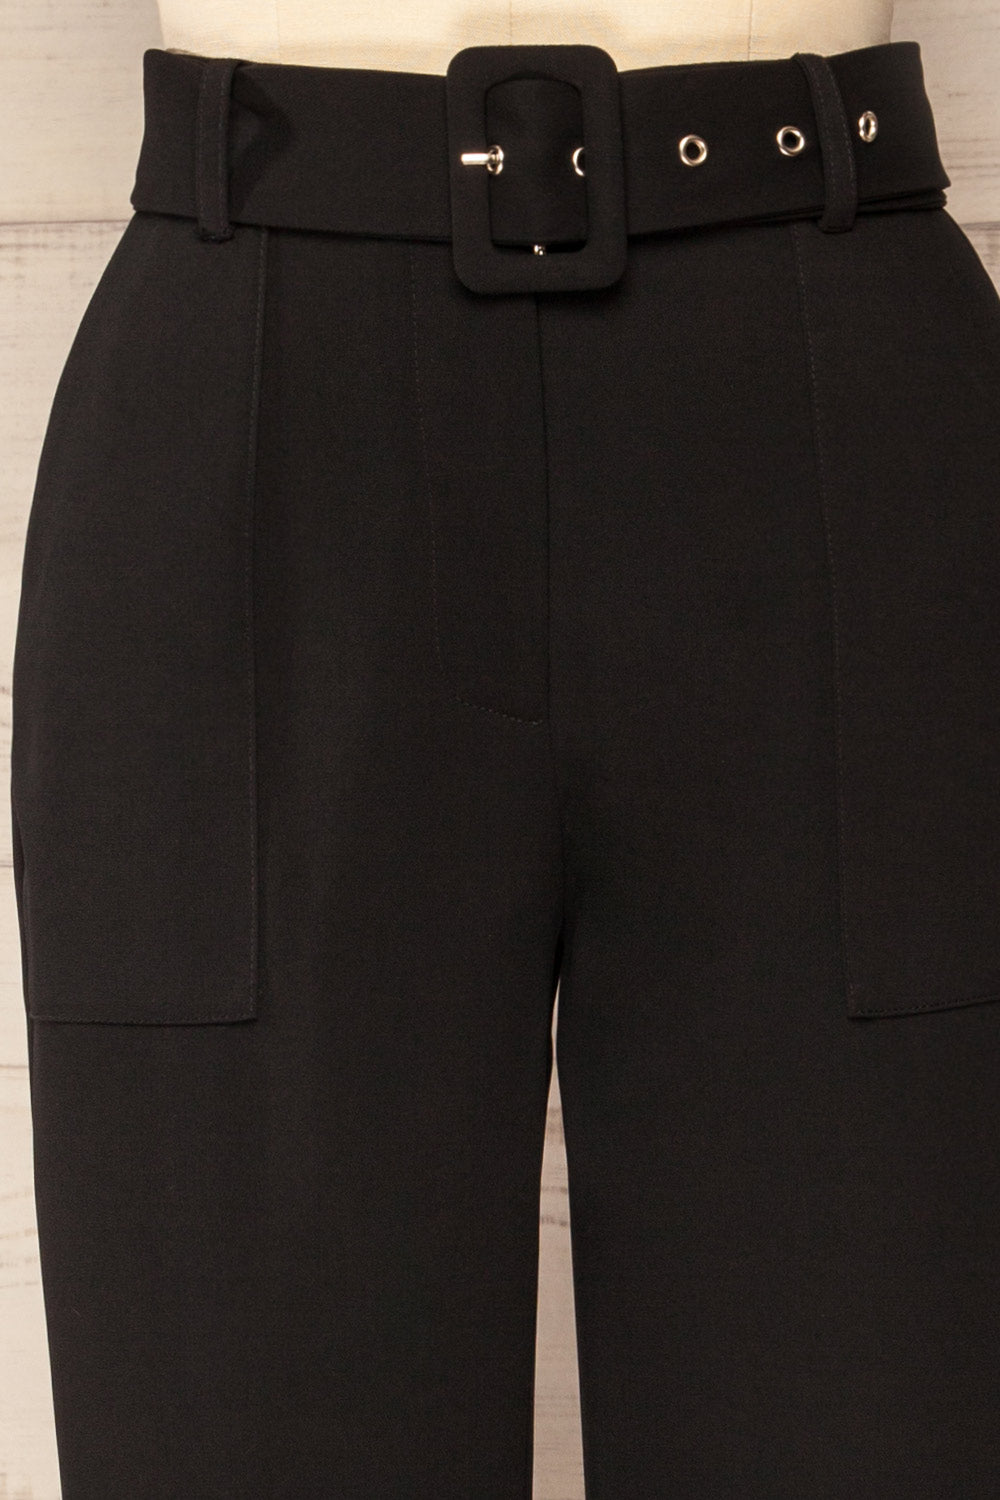 Palizzolo High-Waisted Pants with Belt | La petite garçonne front close-up